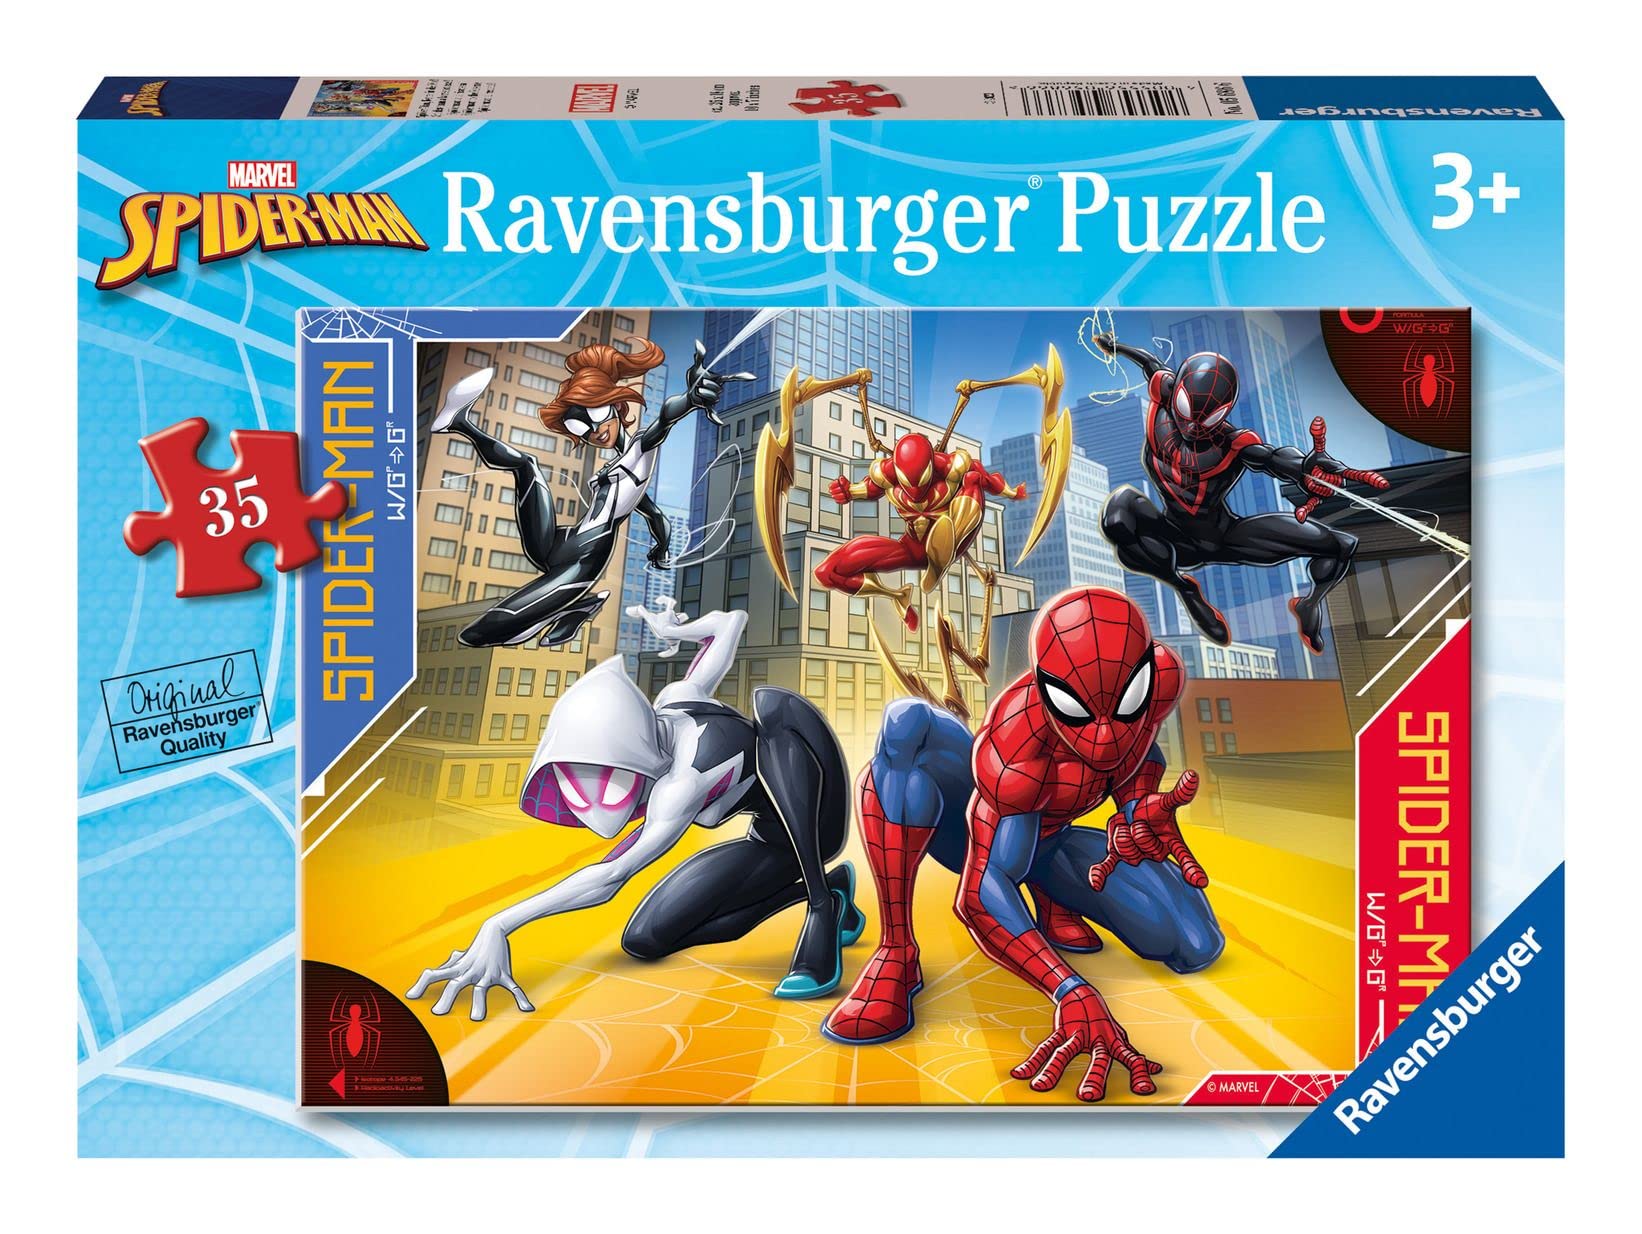 Ravensburger Spiderman 35 Piece Jigsaw Puzzle